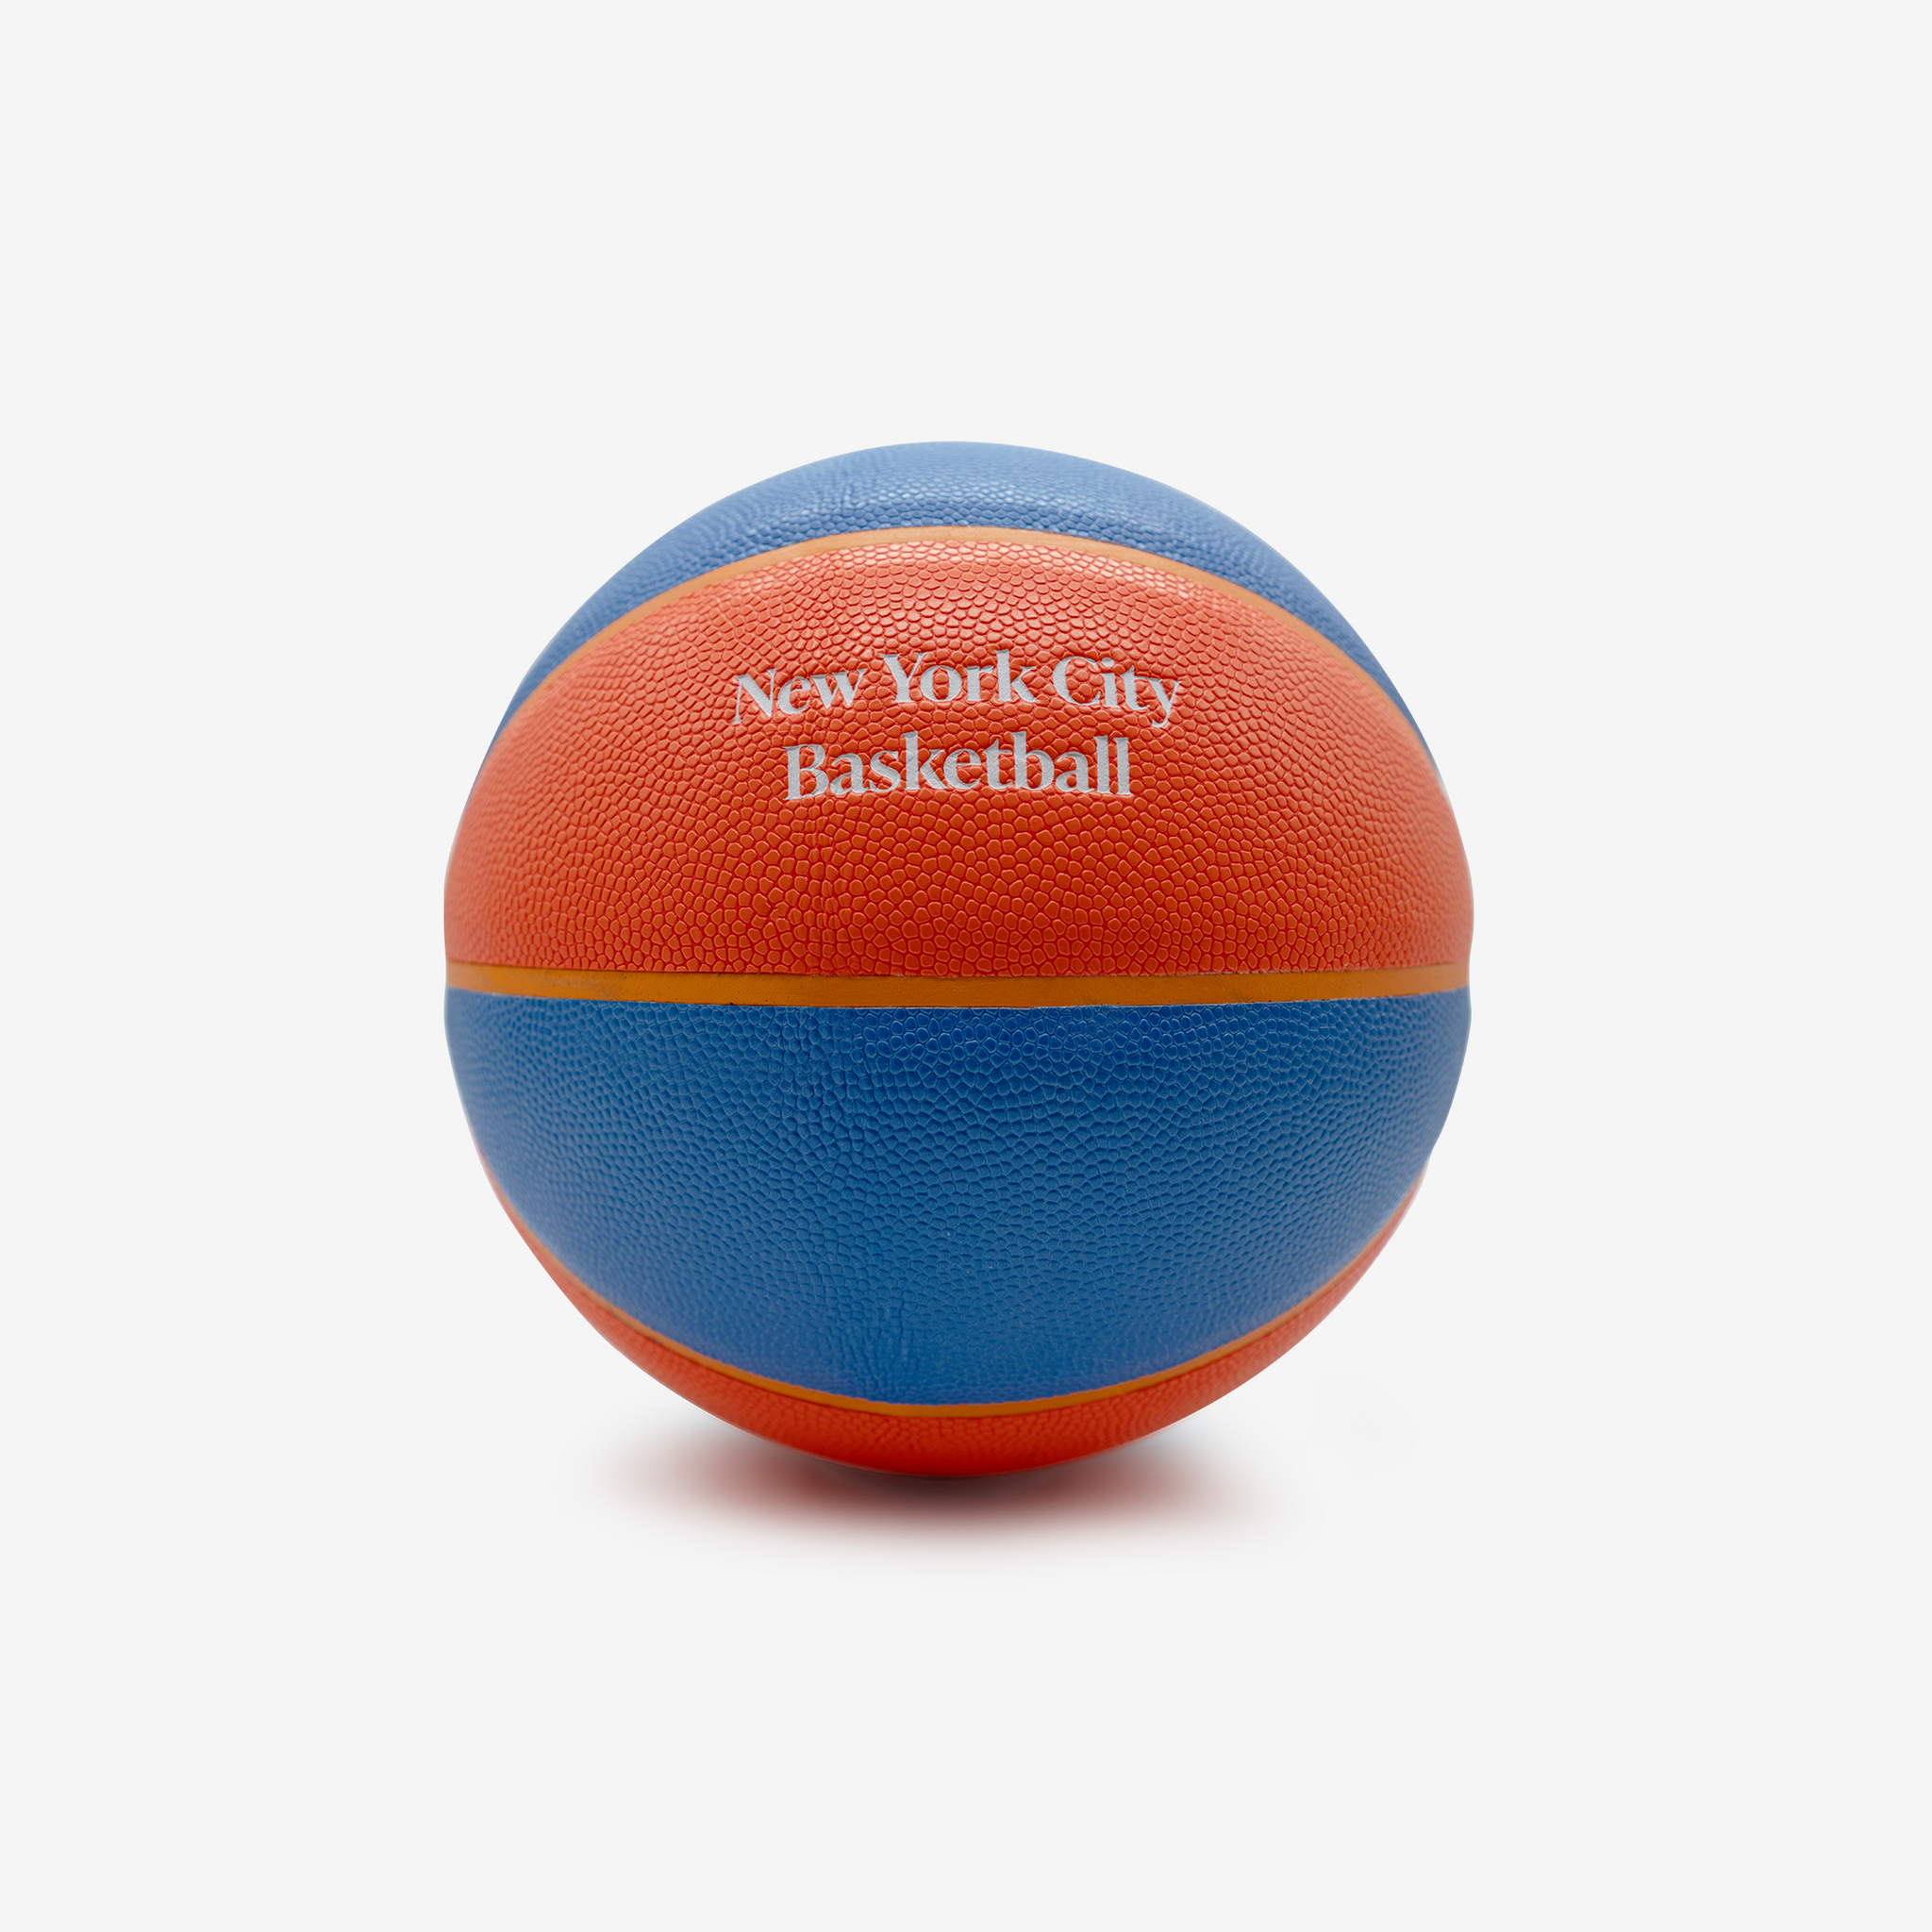 New York City Basketball